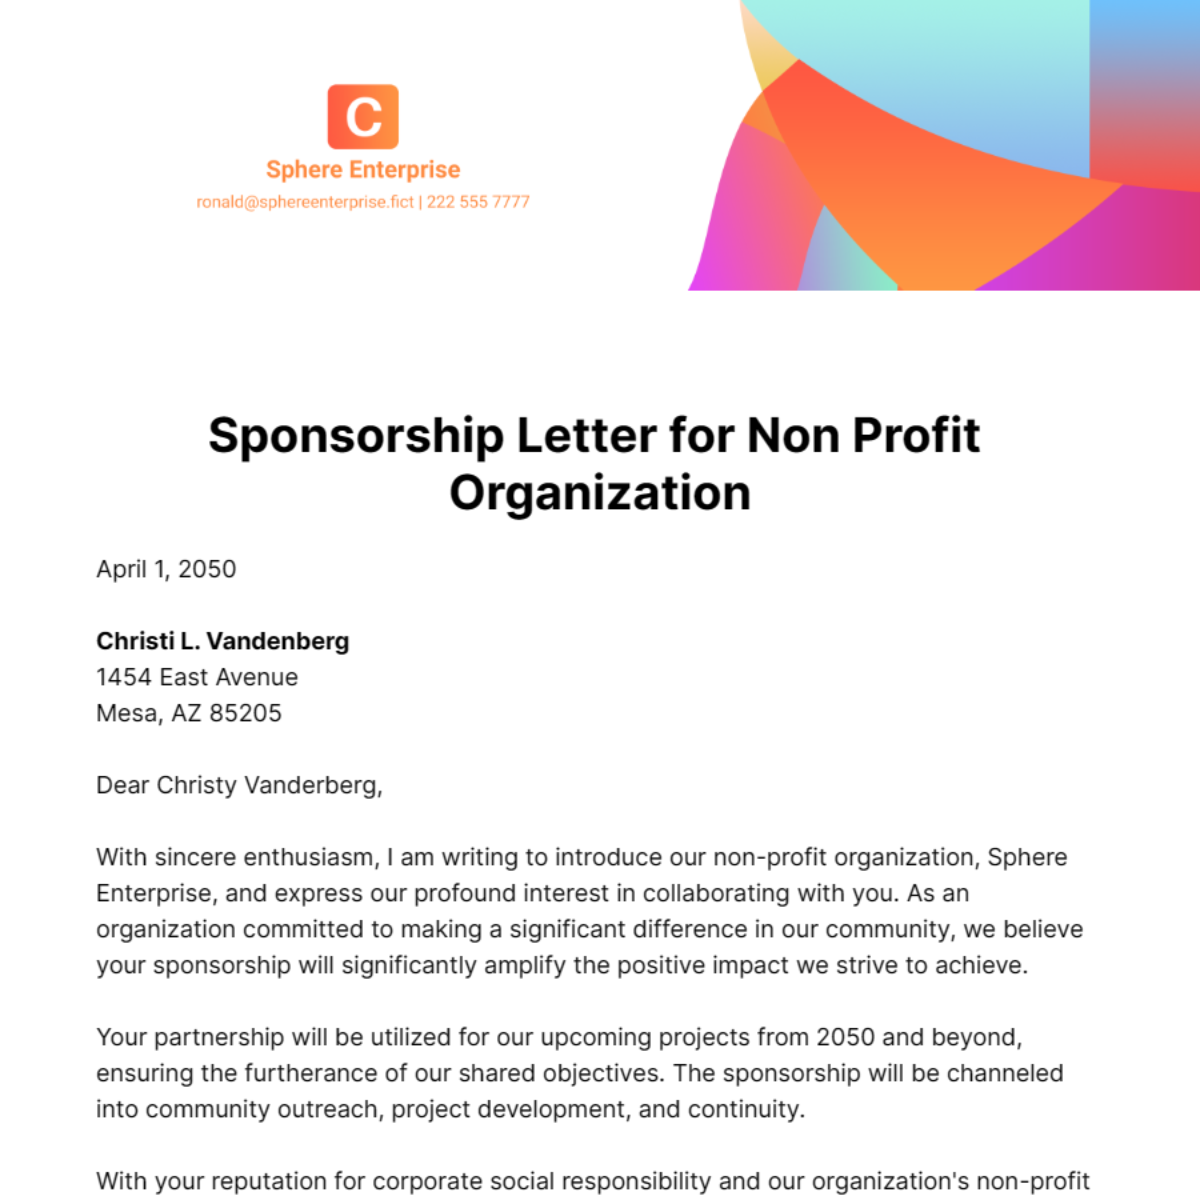 Sponsorship Letter for Non Profit Organization Template